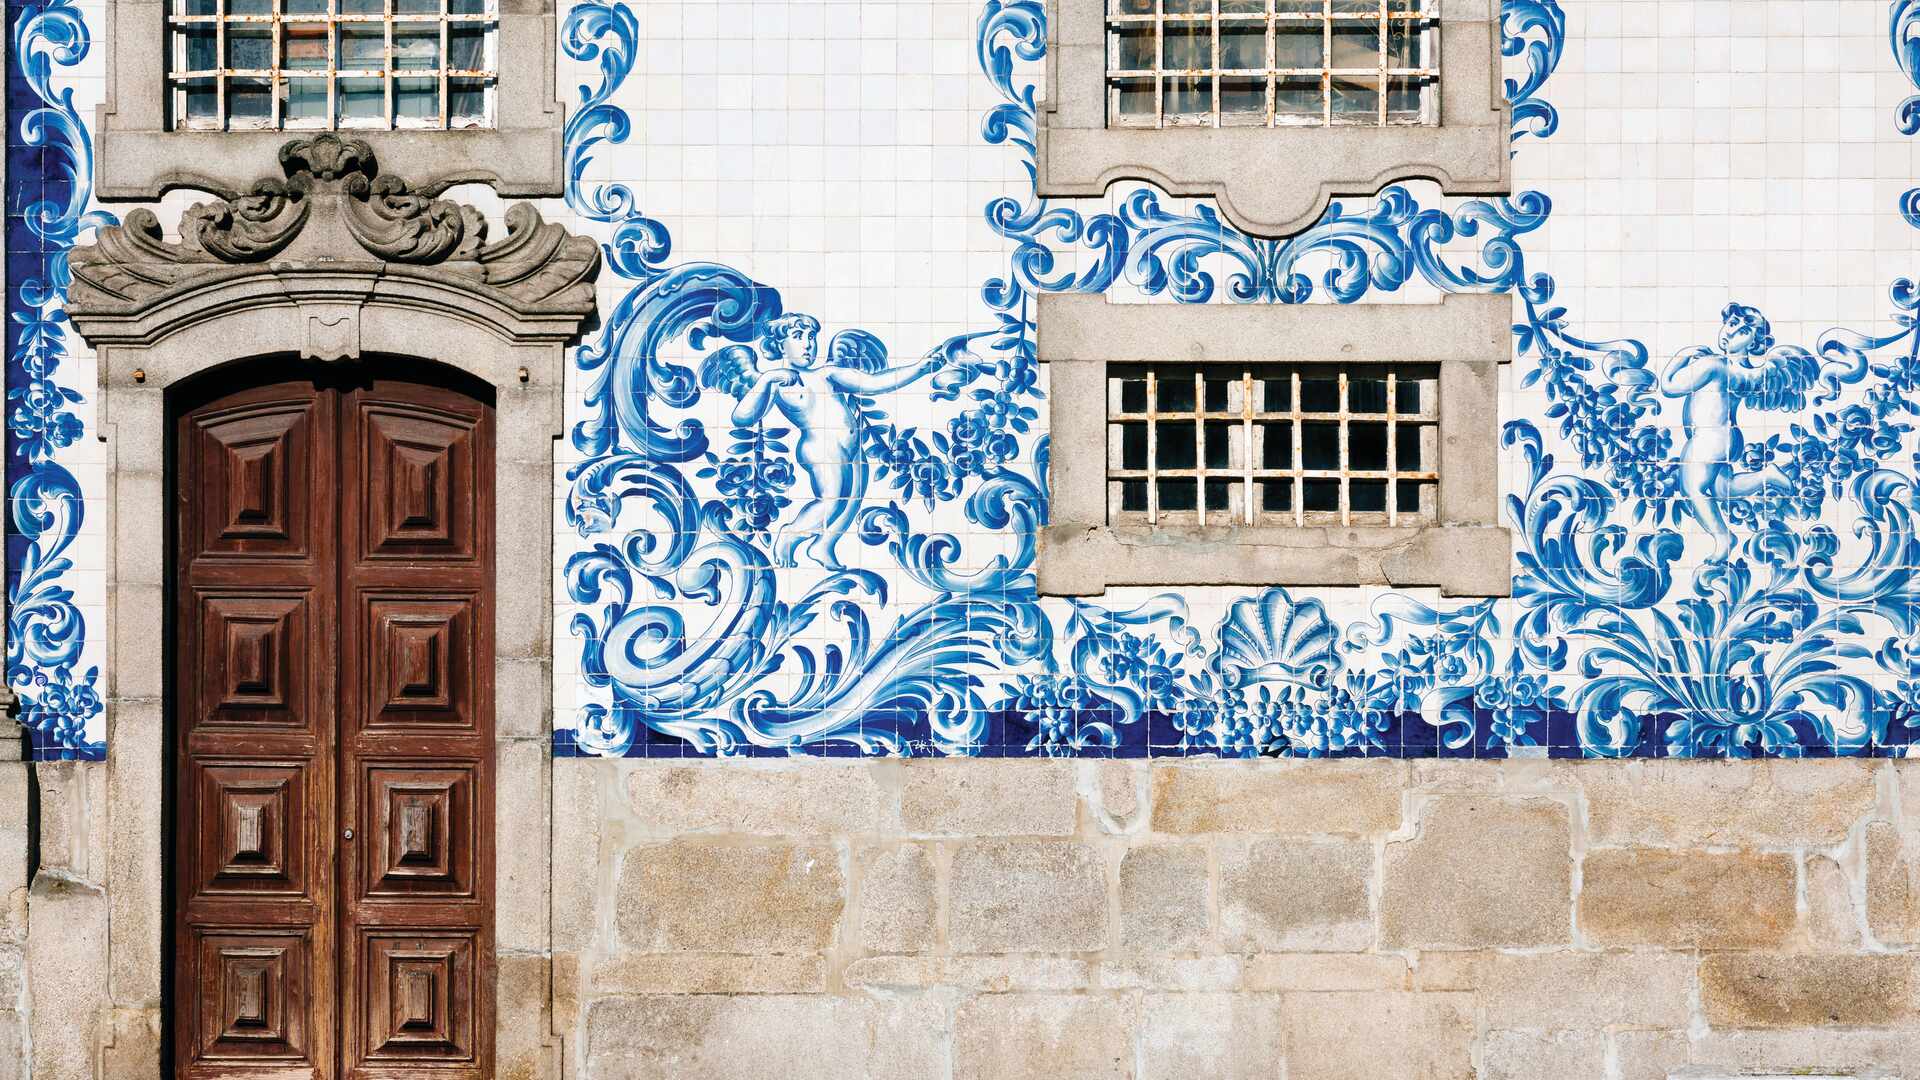 View of tiles in doorway Porto, Portugal